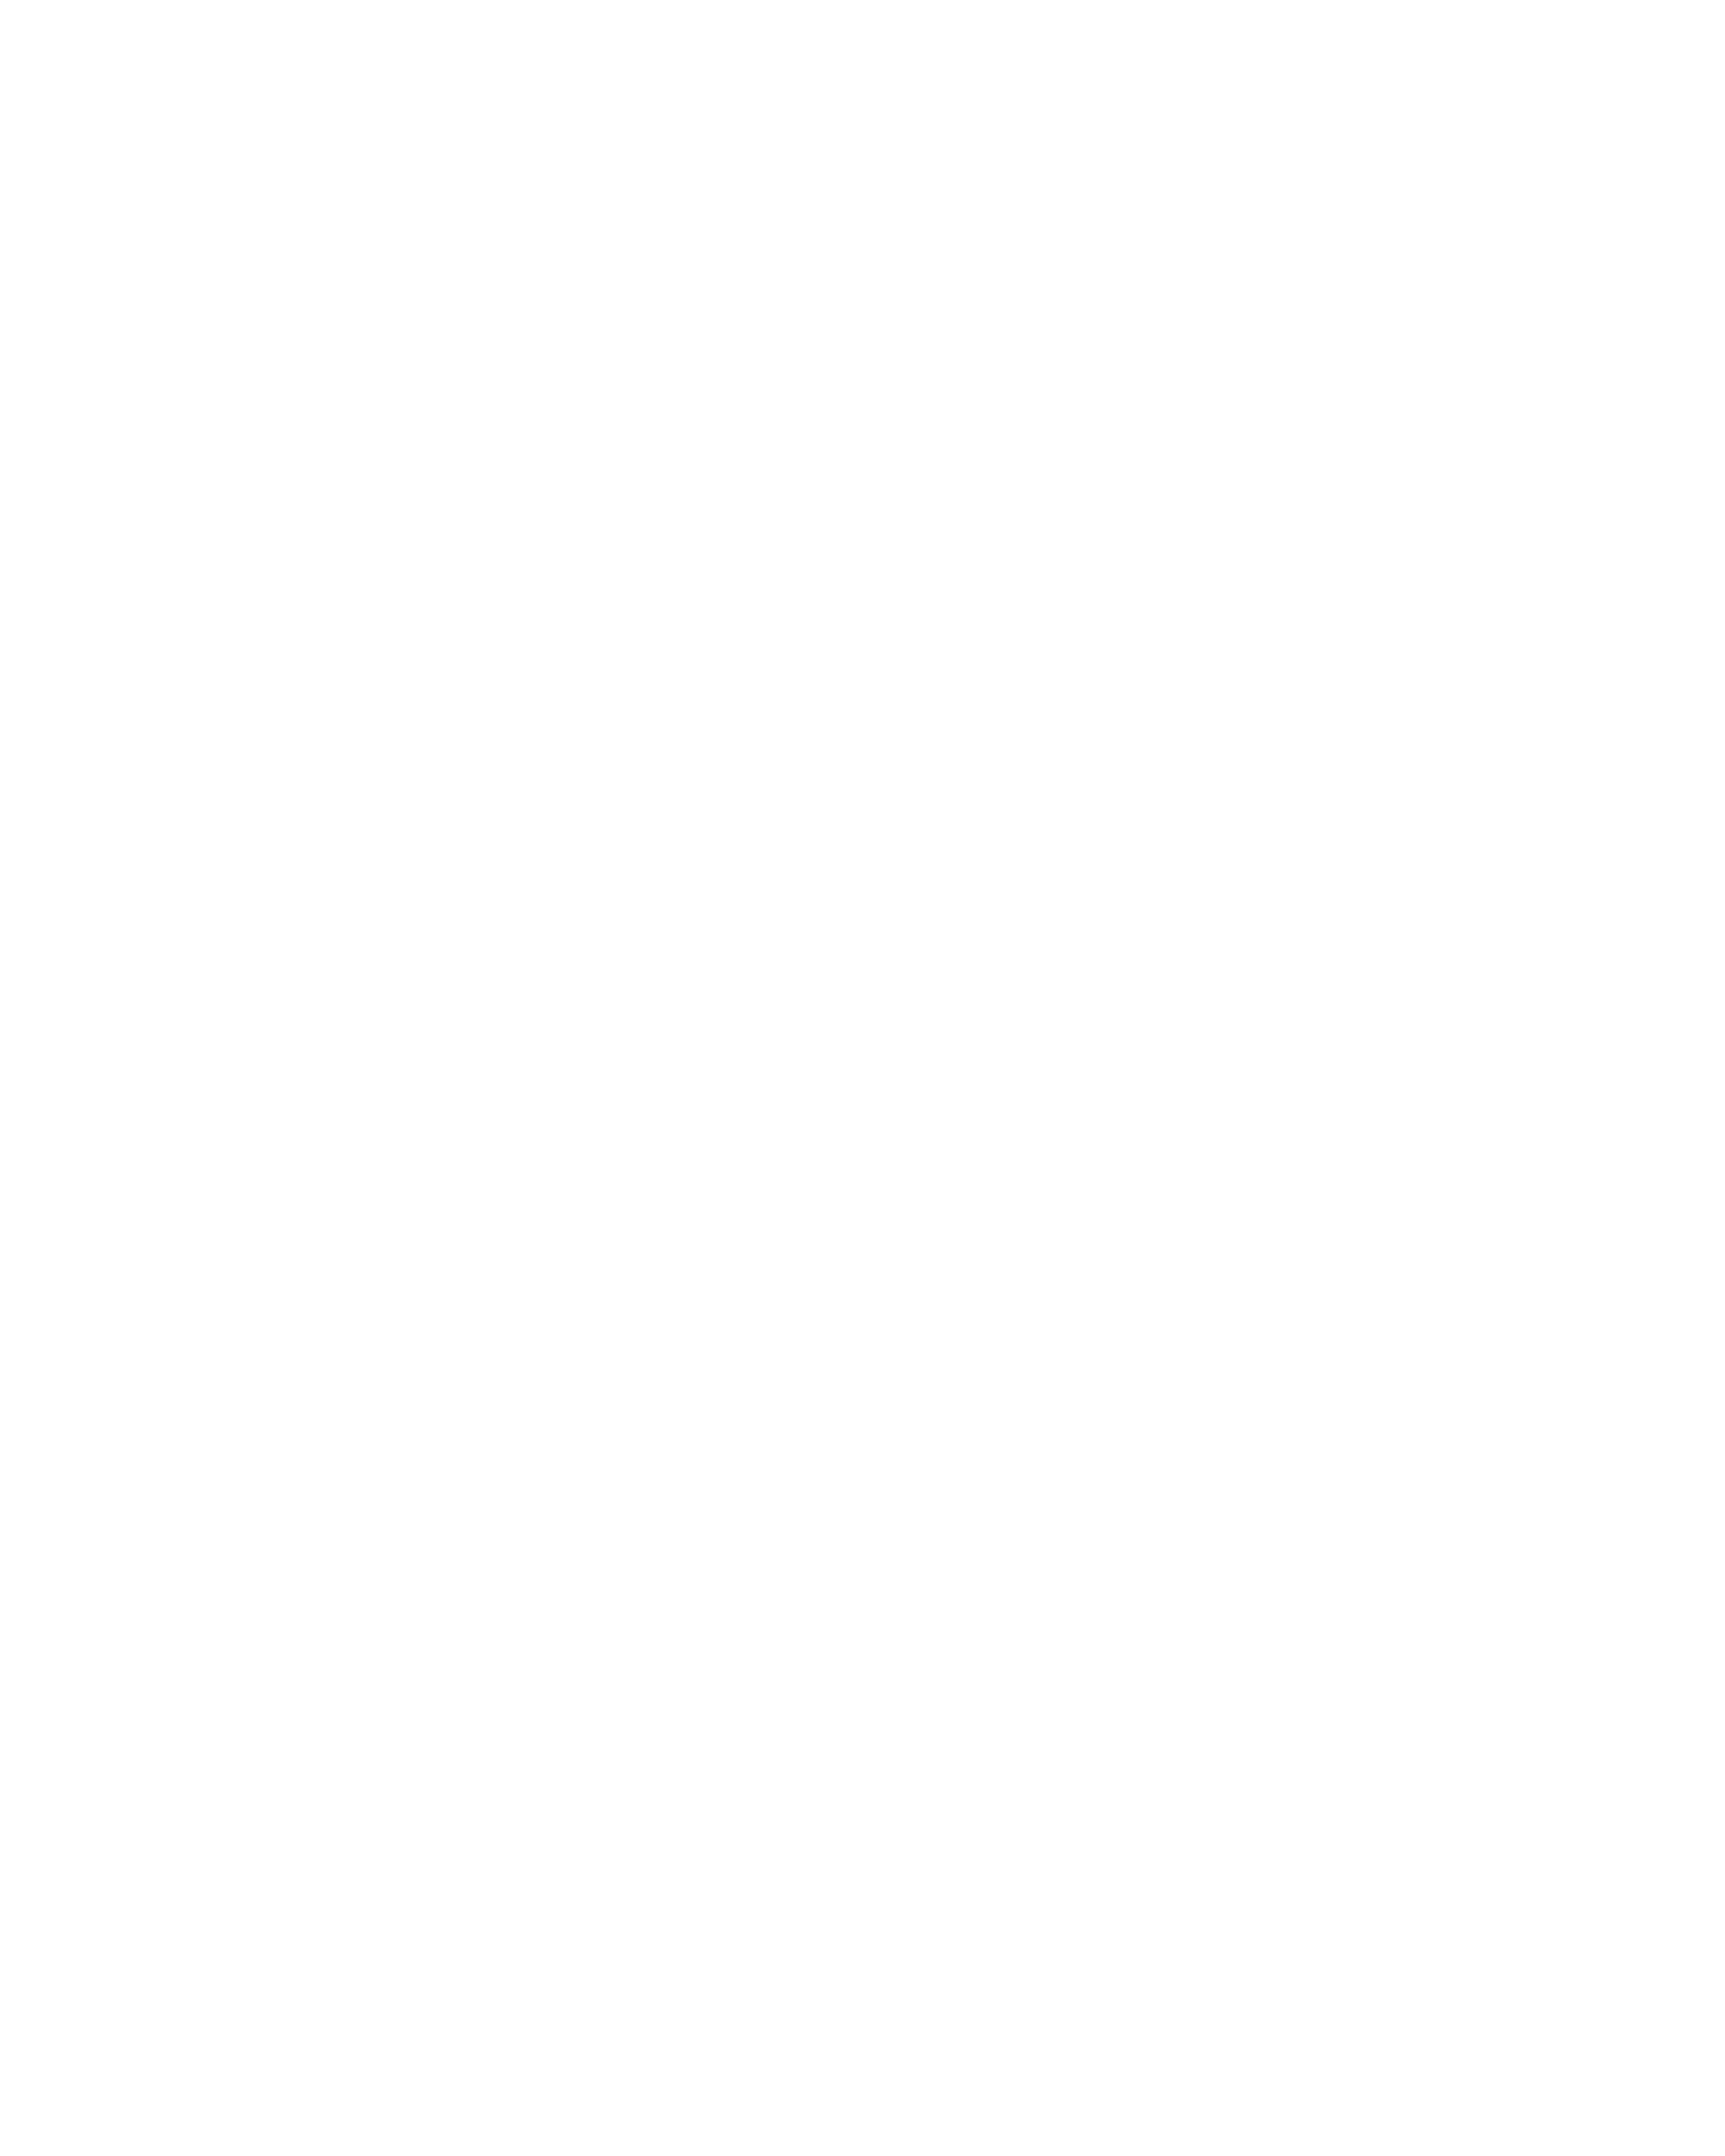 Foundry Sword and Shield Logo